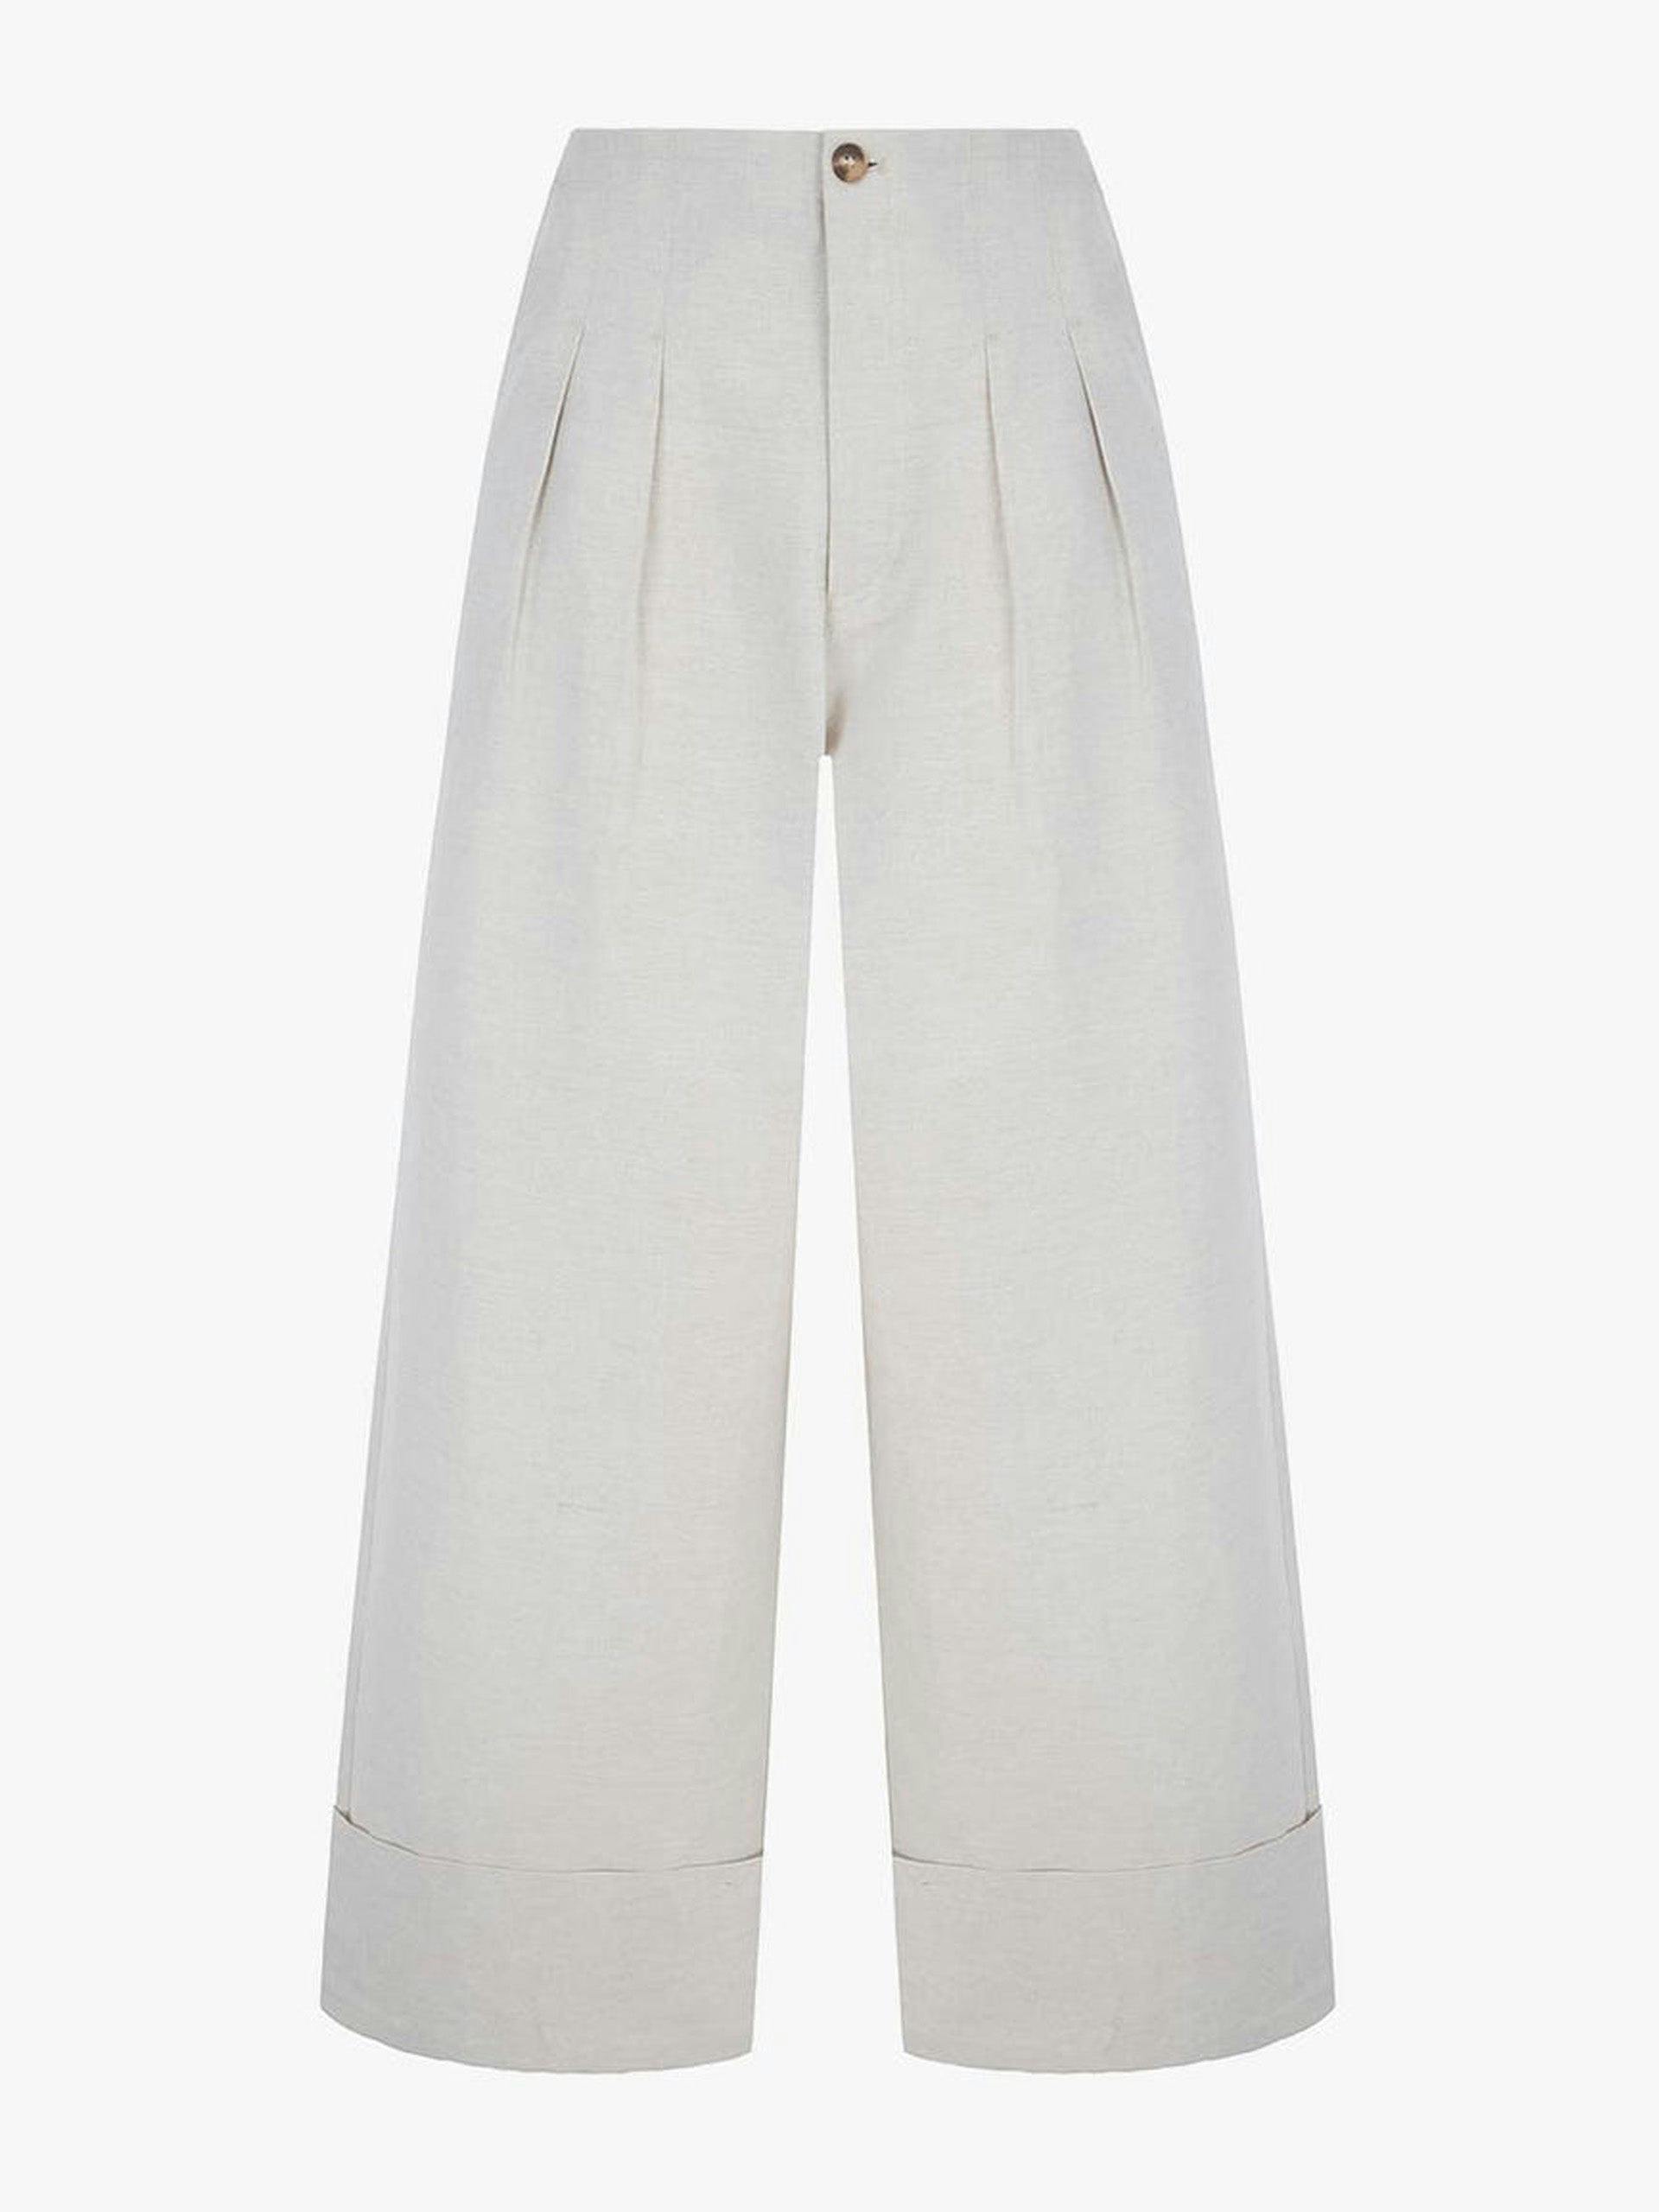 Fresh linen trousers